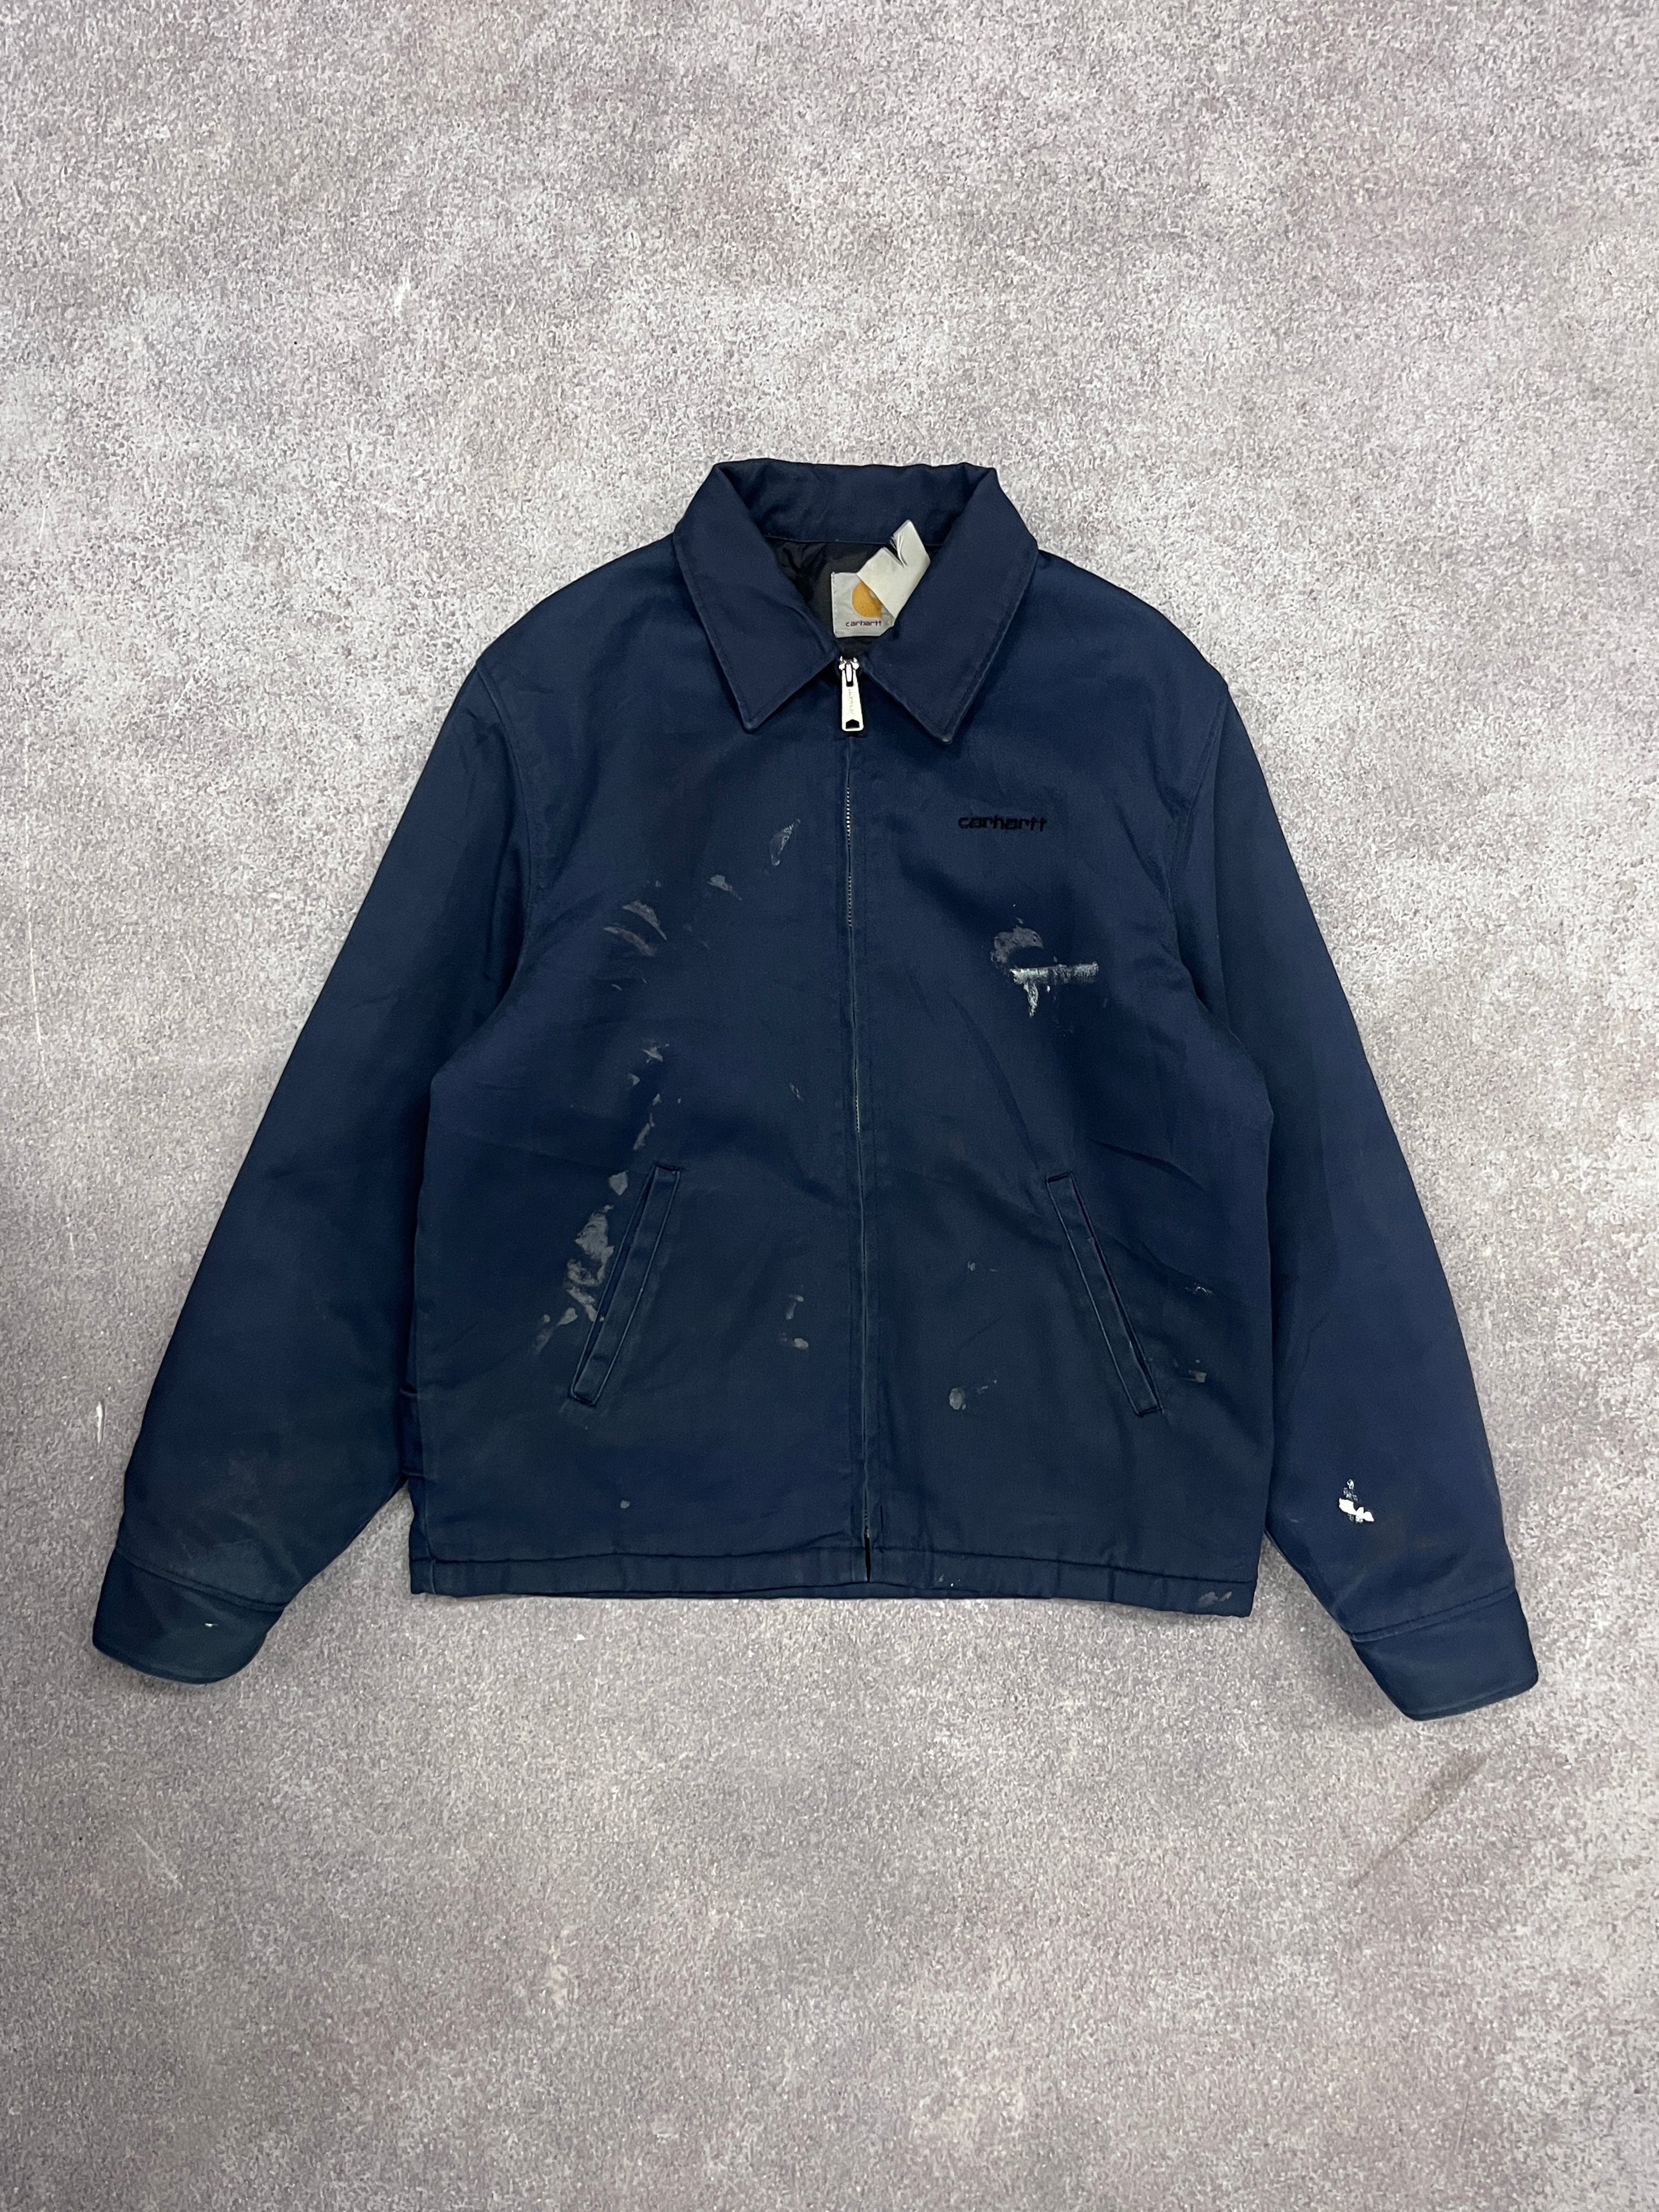 Vintage Carhartt Workwear Jacket Blue // X-Large - RHAGHOUSE VINTAGE